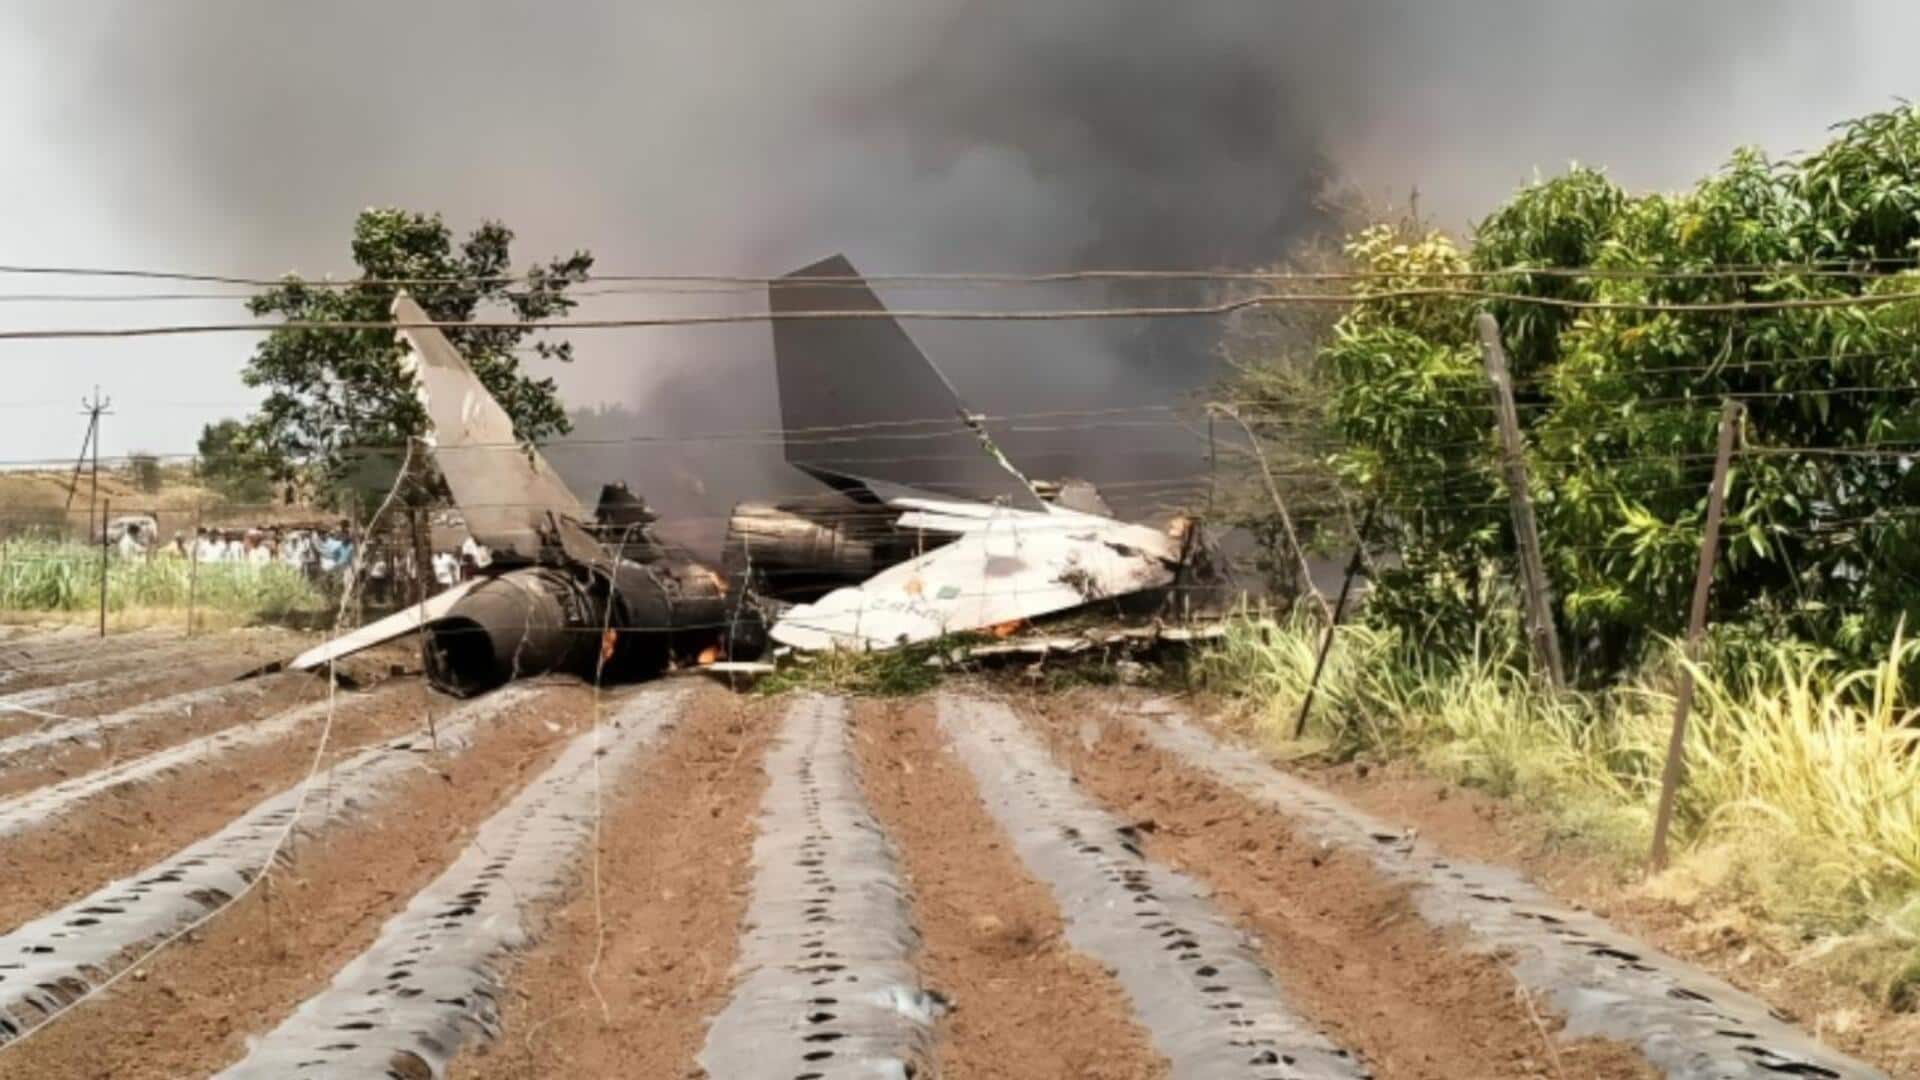 महाराष्ट्र: नासिक में भारतीय वायुसेना का सुखोई लड़ाकू विमान दुर्घटनाग्रस्त, पायलट सुरक्षित